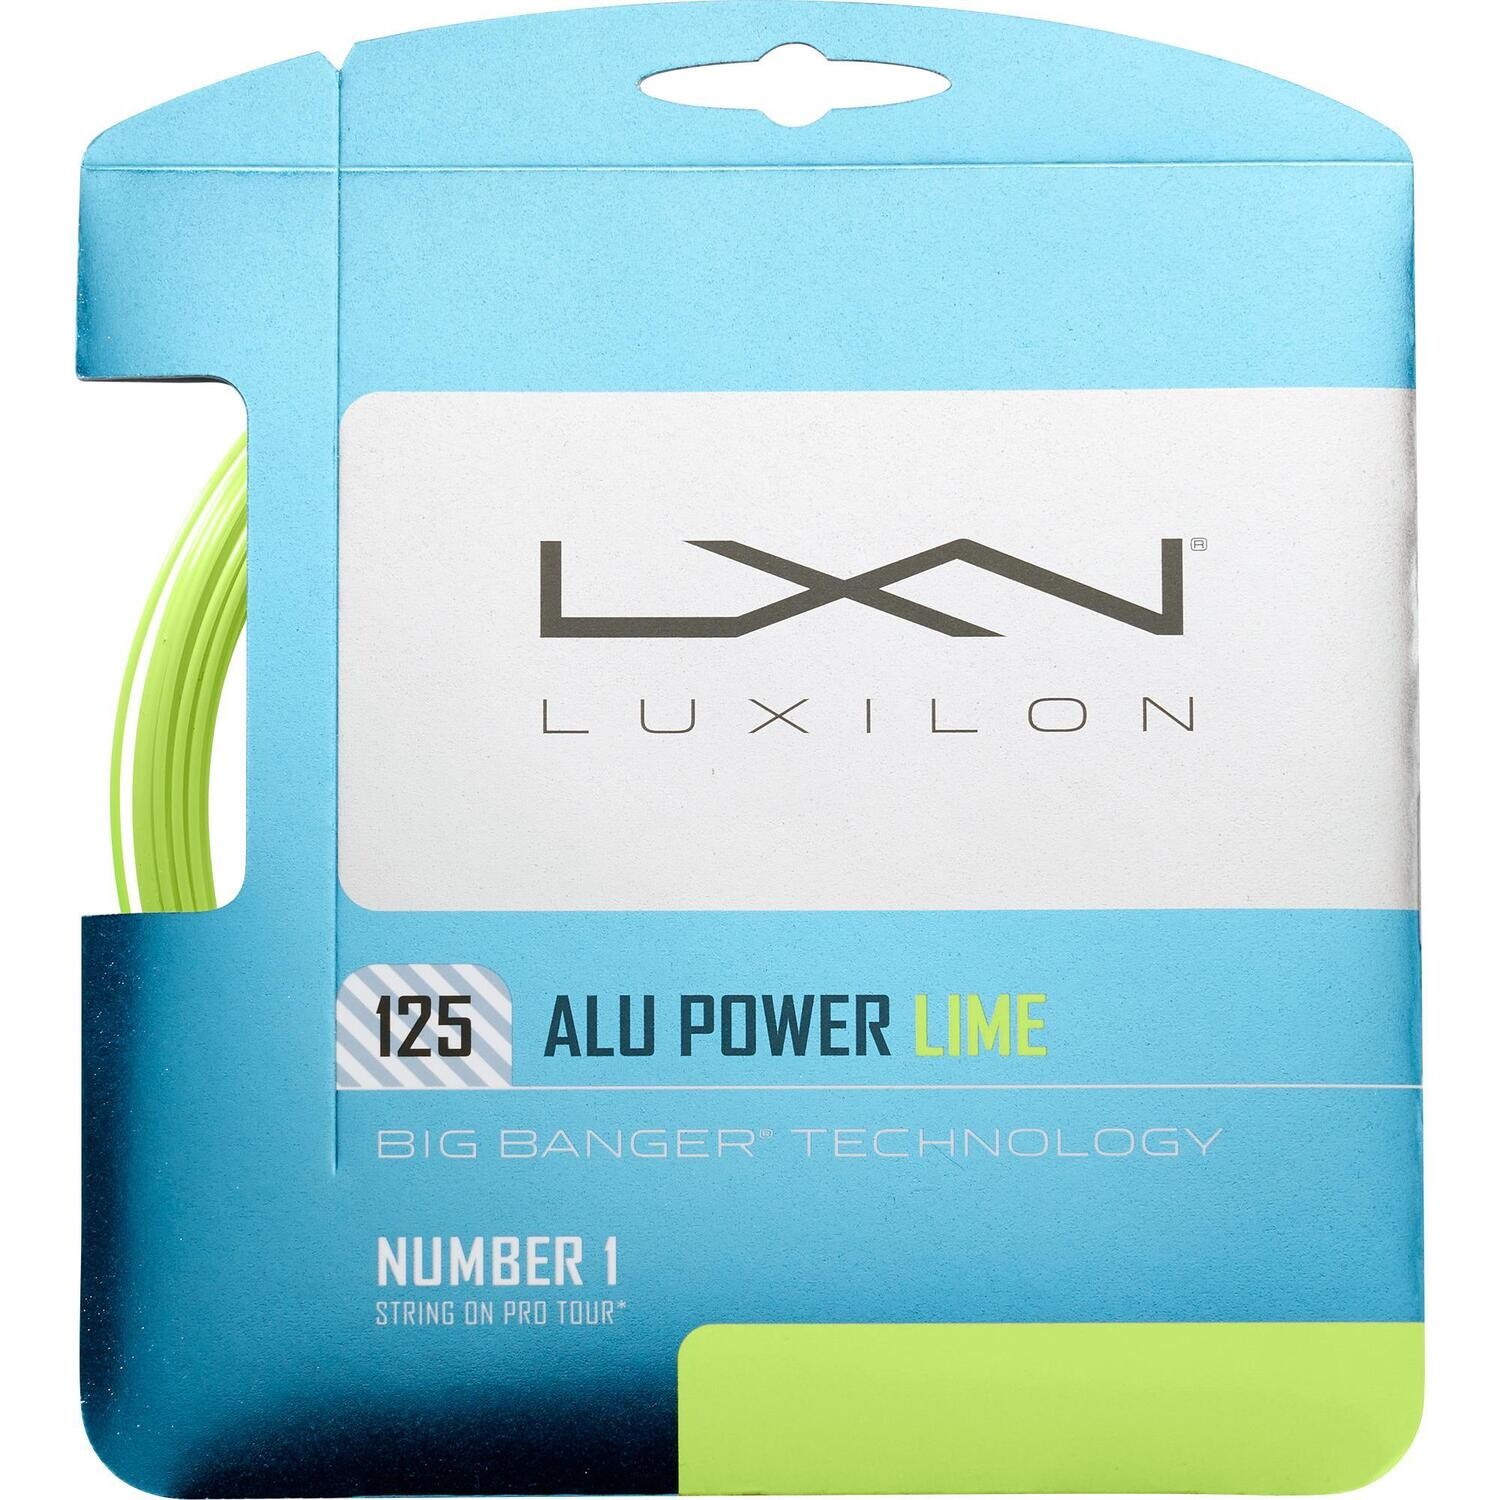 Luxilon Alu Power 125 Tennis String Set - Lime